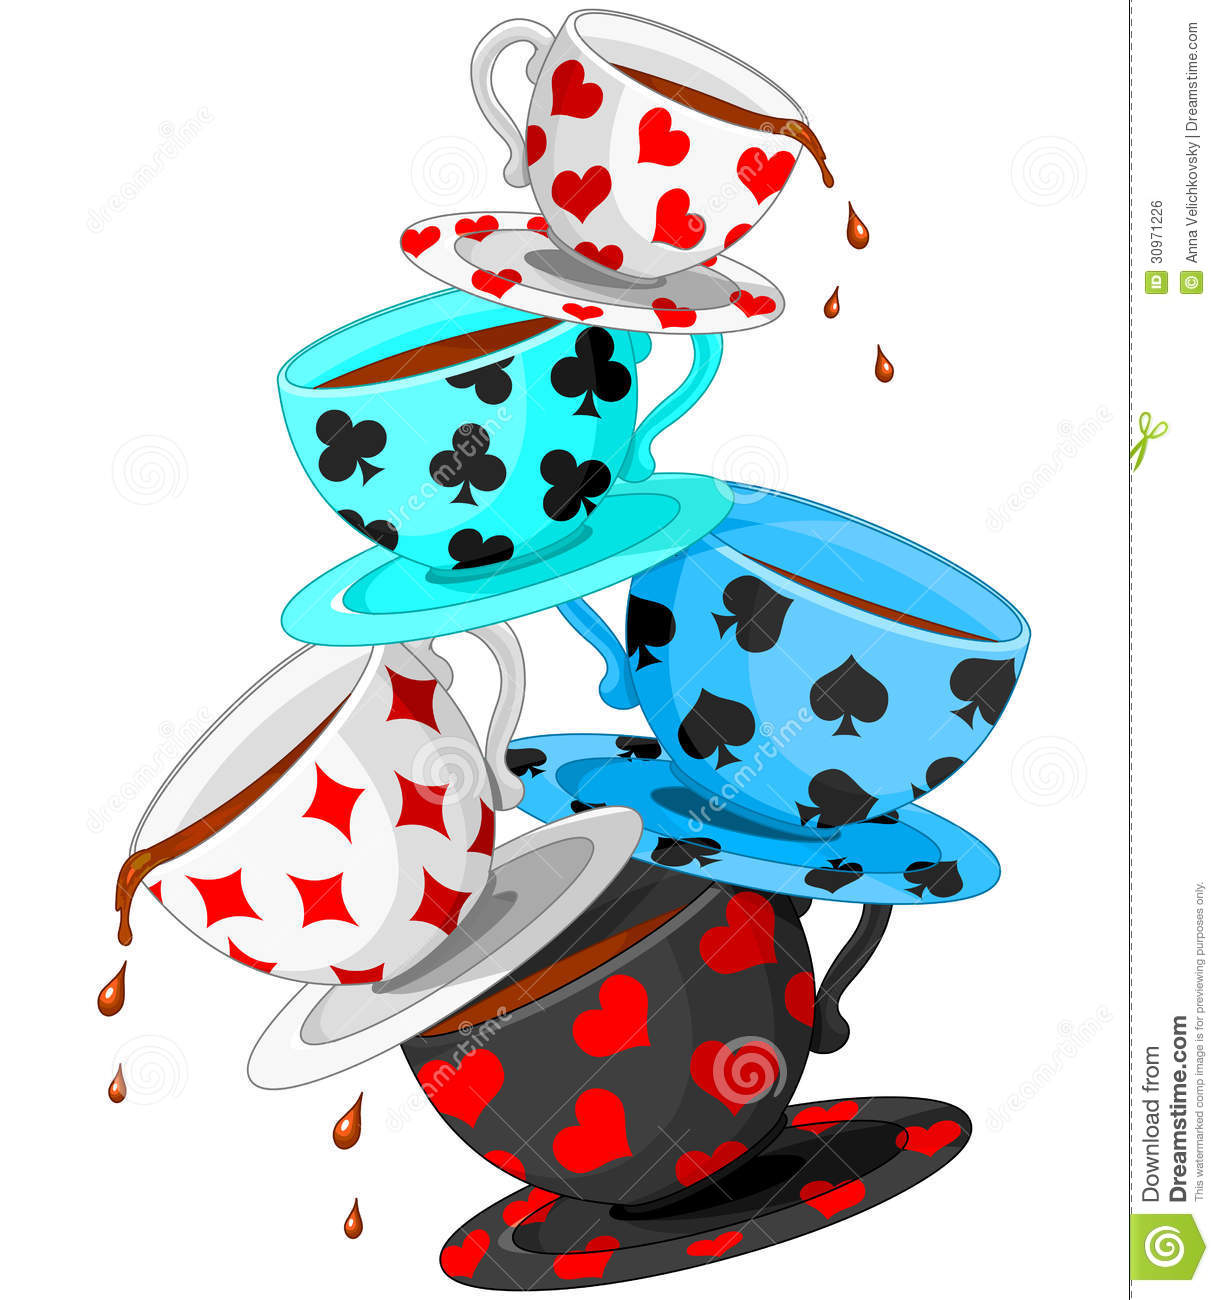 Tea Cups Pyramid Royalty Free Stock Image   Image  30971226